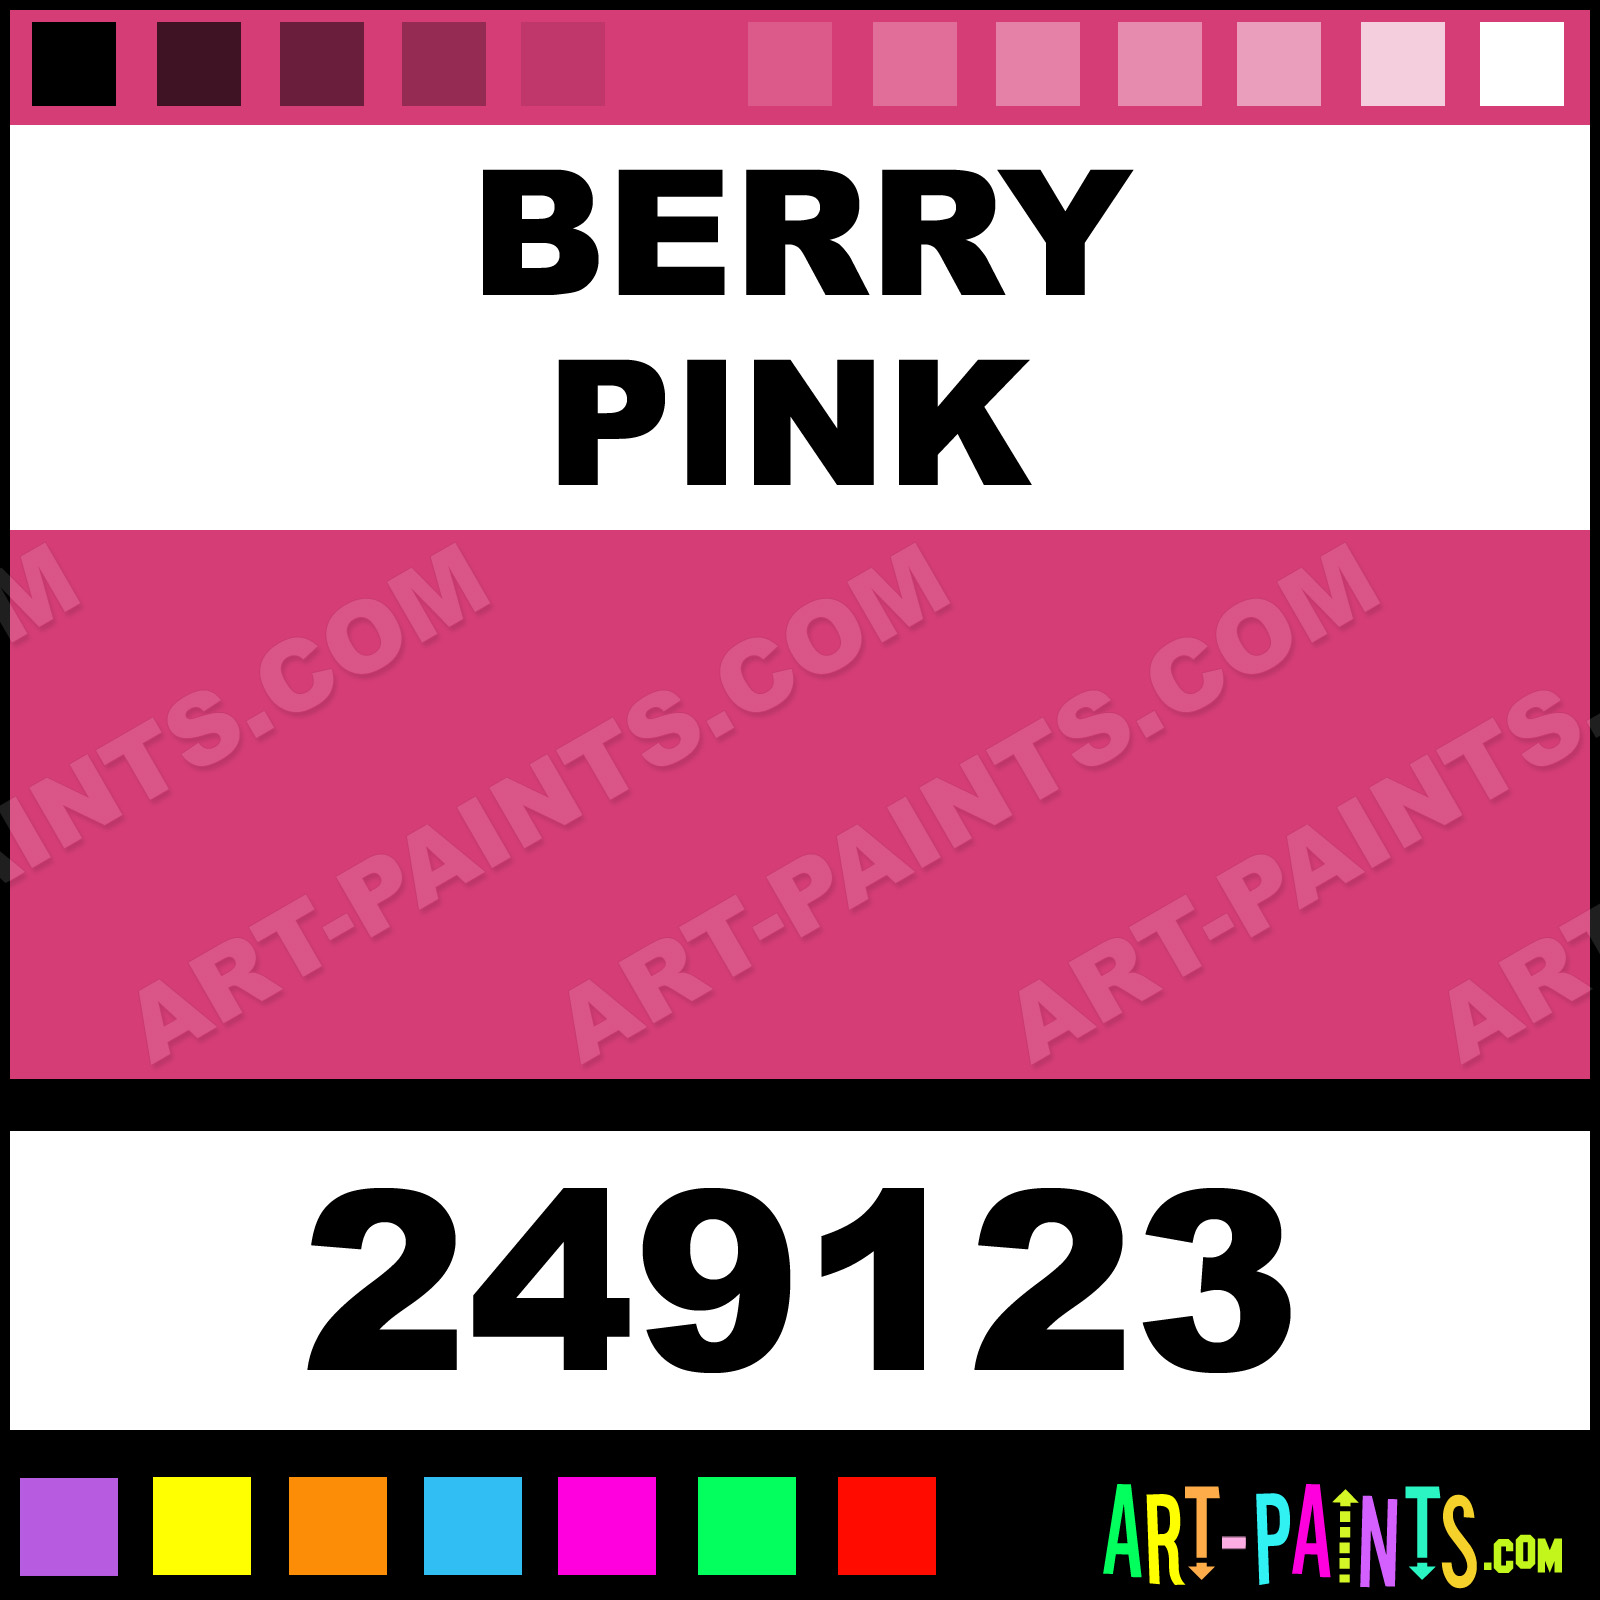 Berry Pink Ultra Cover 2x Ceramic Paints - 249123 - Berry Pink Paint, Berry  Pink Color, Rust-Oleum Ultra Cover 2x Porcelain, Pottery, Bisque, Greenware  Ceramic Paint, D53C75 